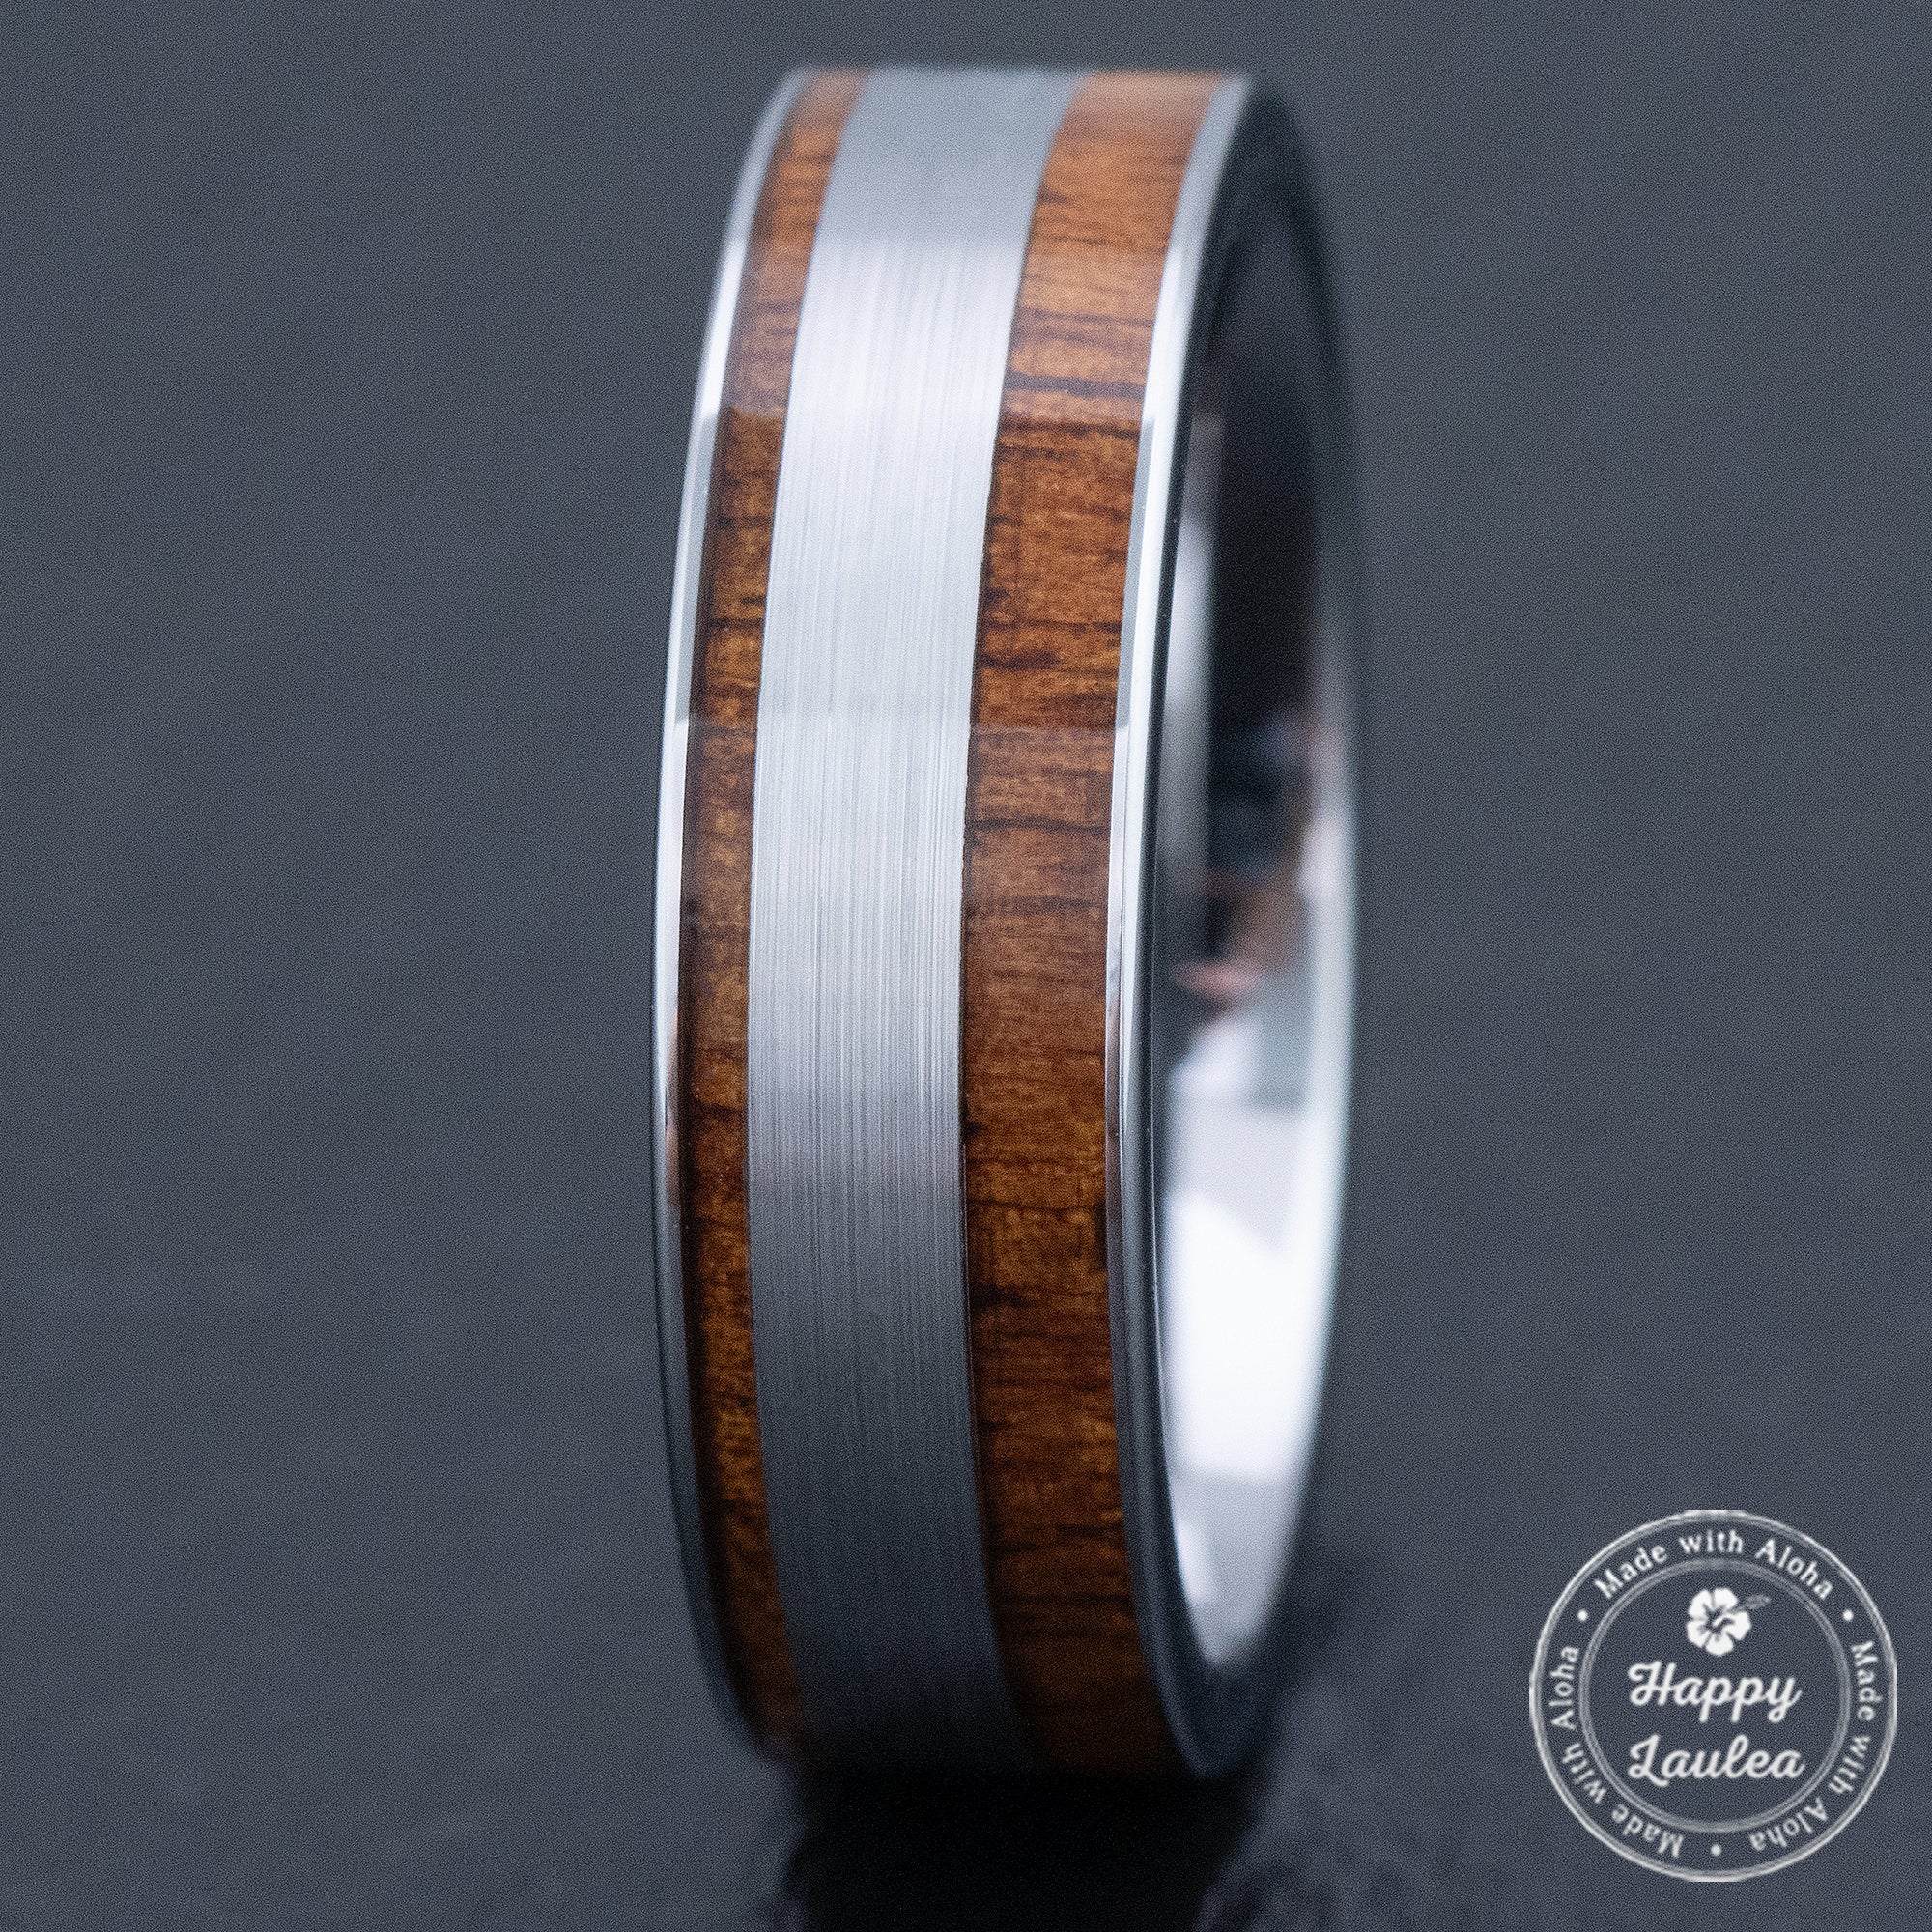 Tungsten Carbide Ring [7mm width] Offset Brush Finish & Hawaiian Koa Inlay - Flat Shape, Comfort Fitment